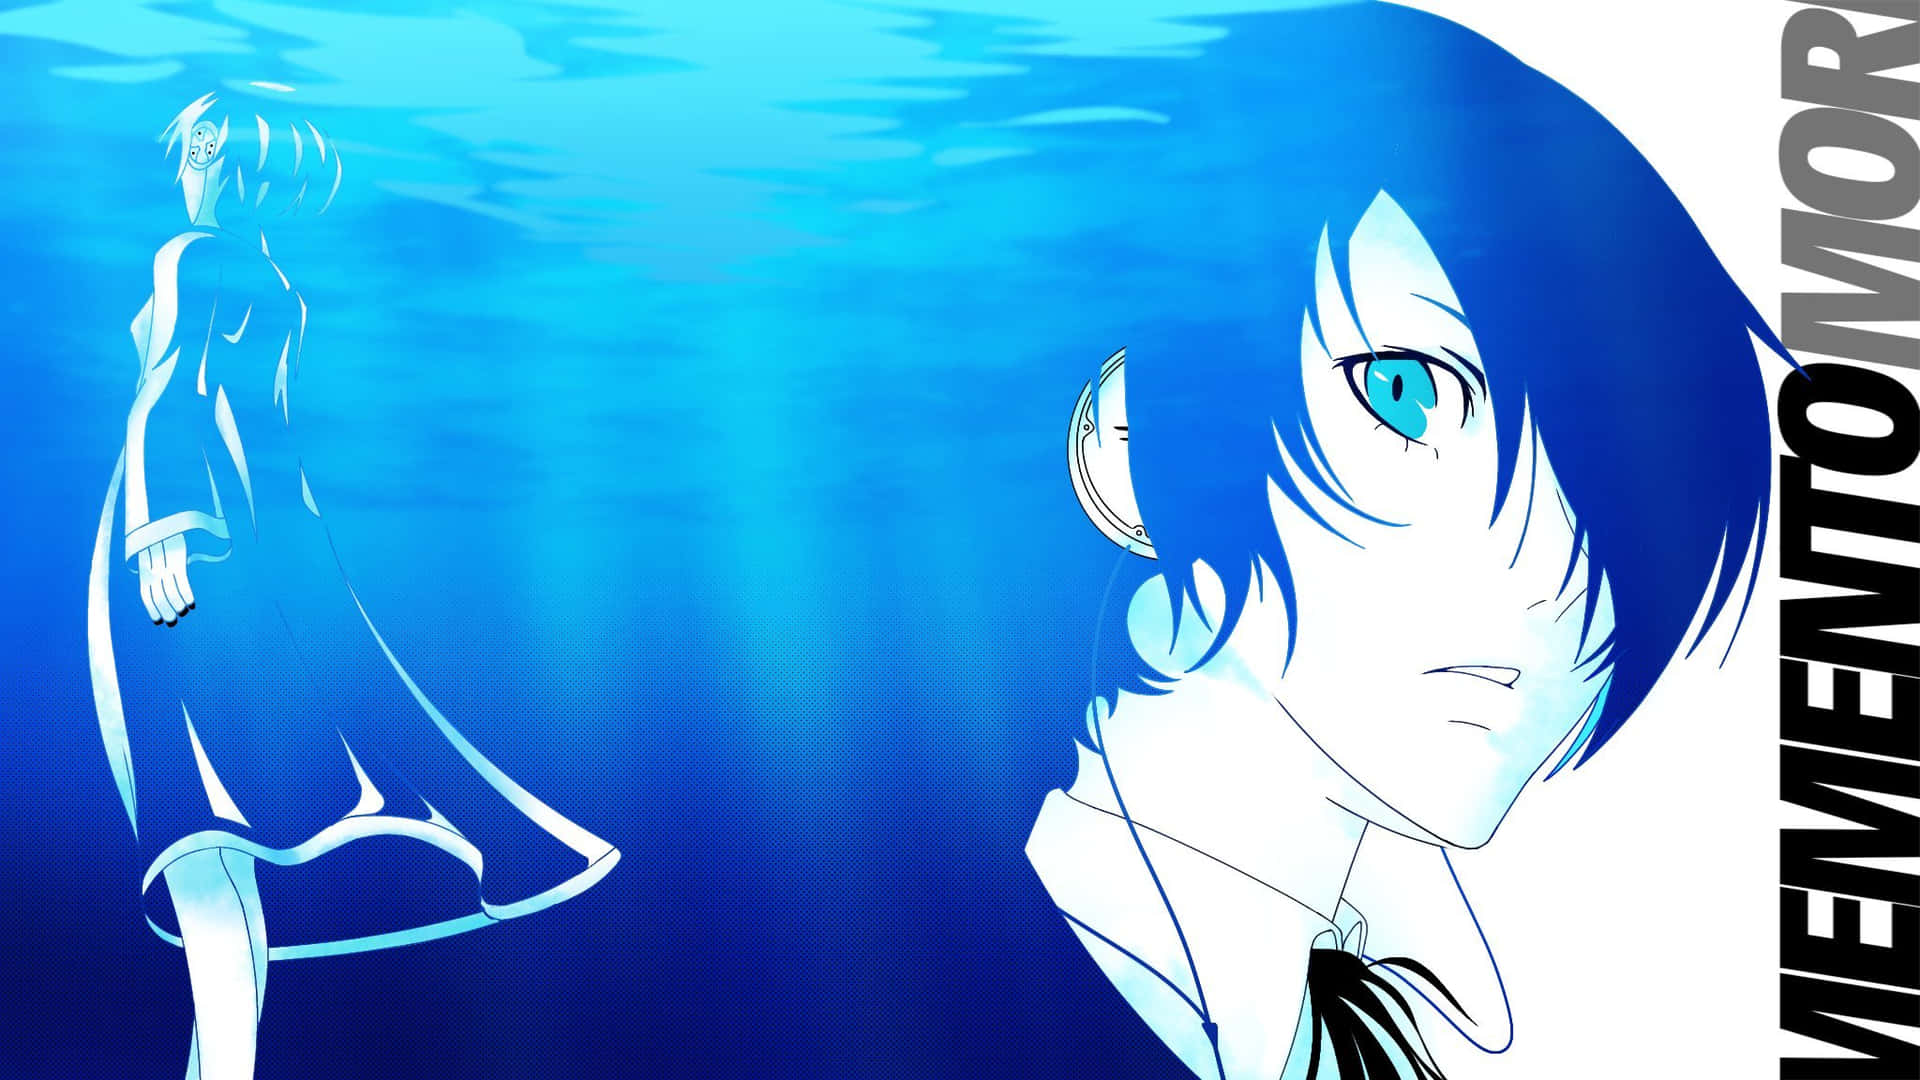 Persona3 Underwater Reflection Wallpaper